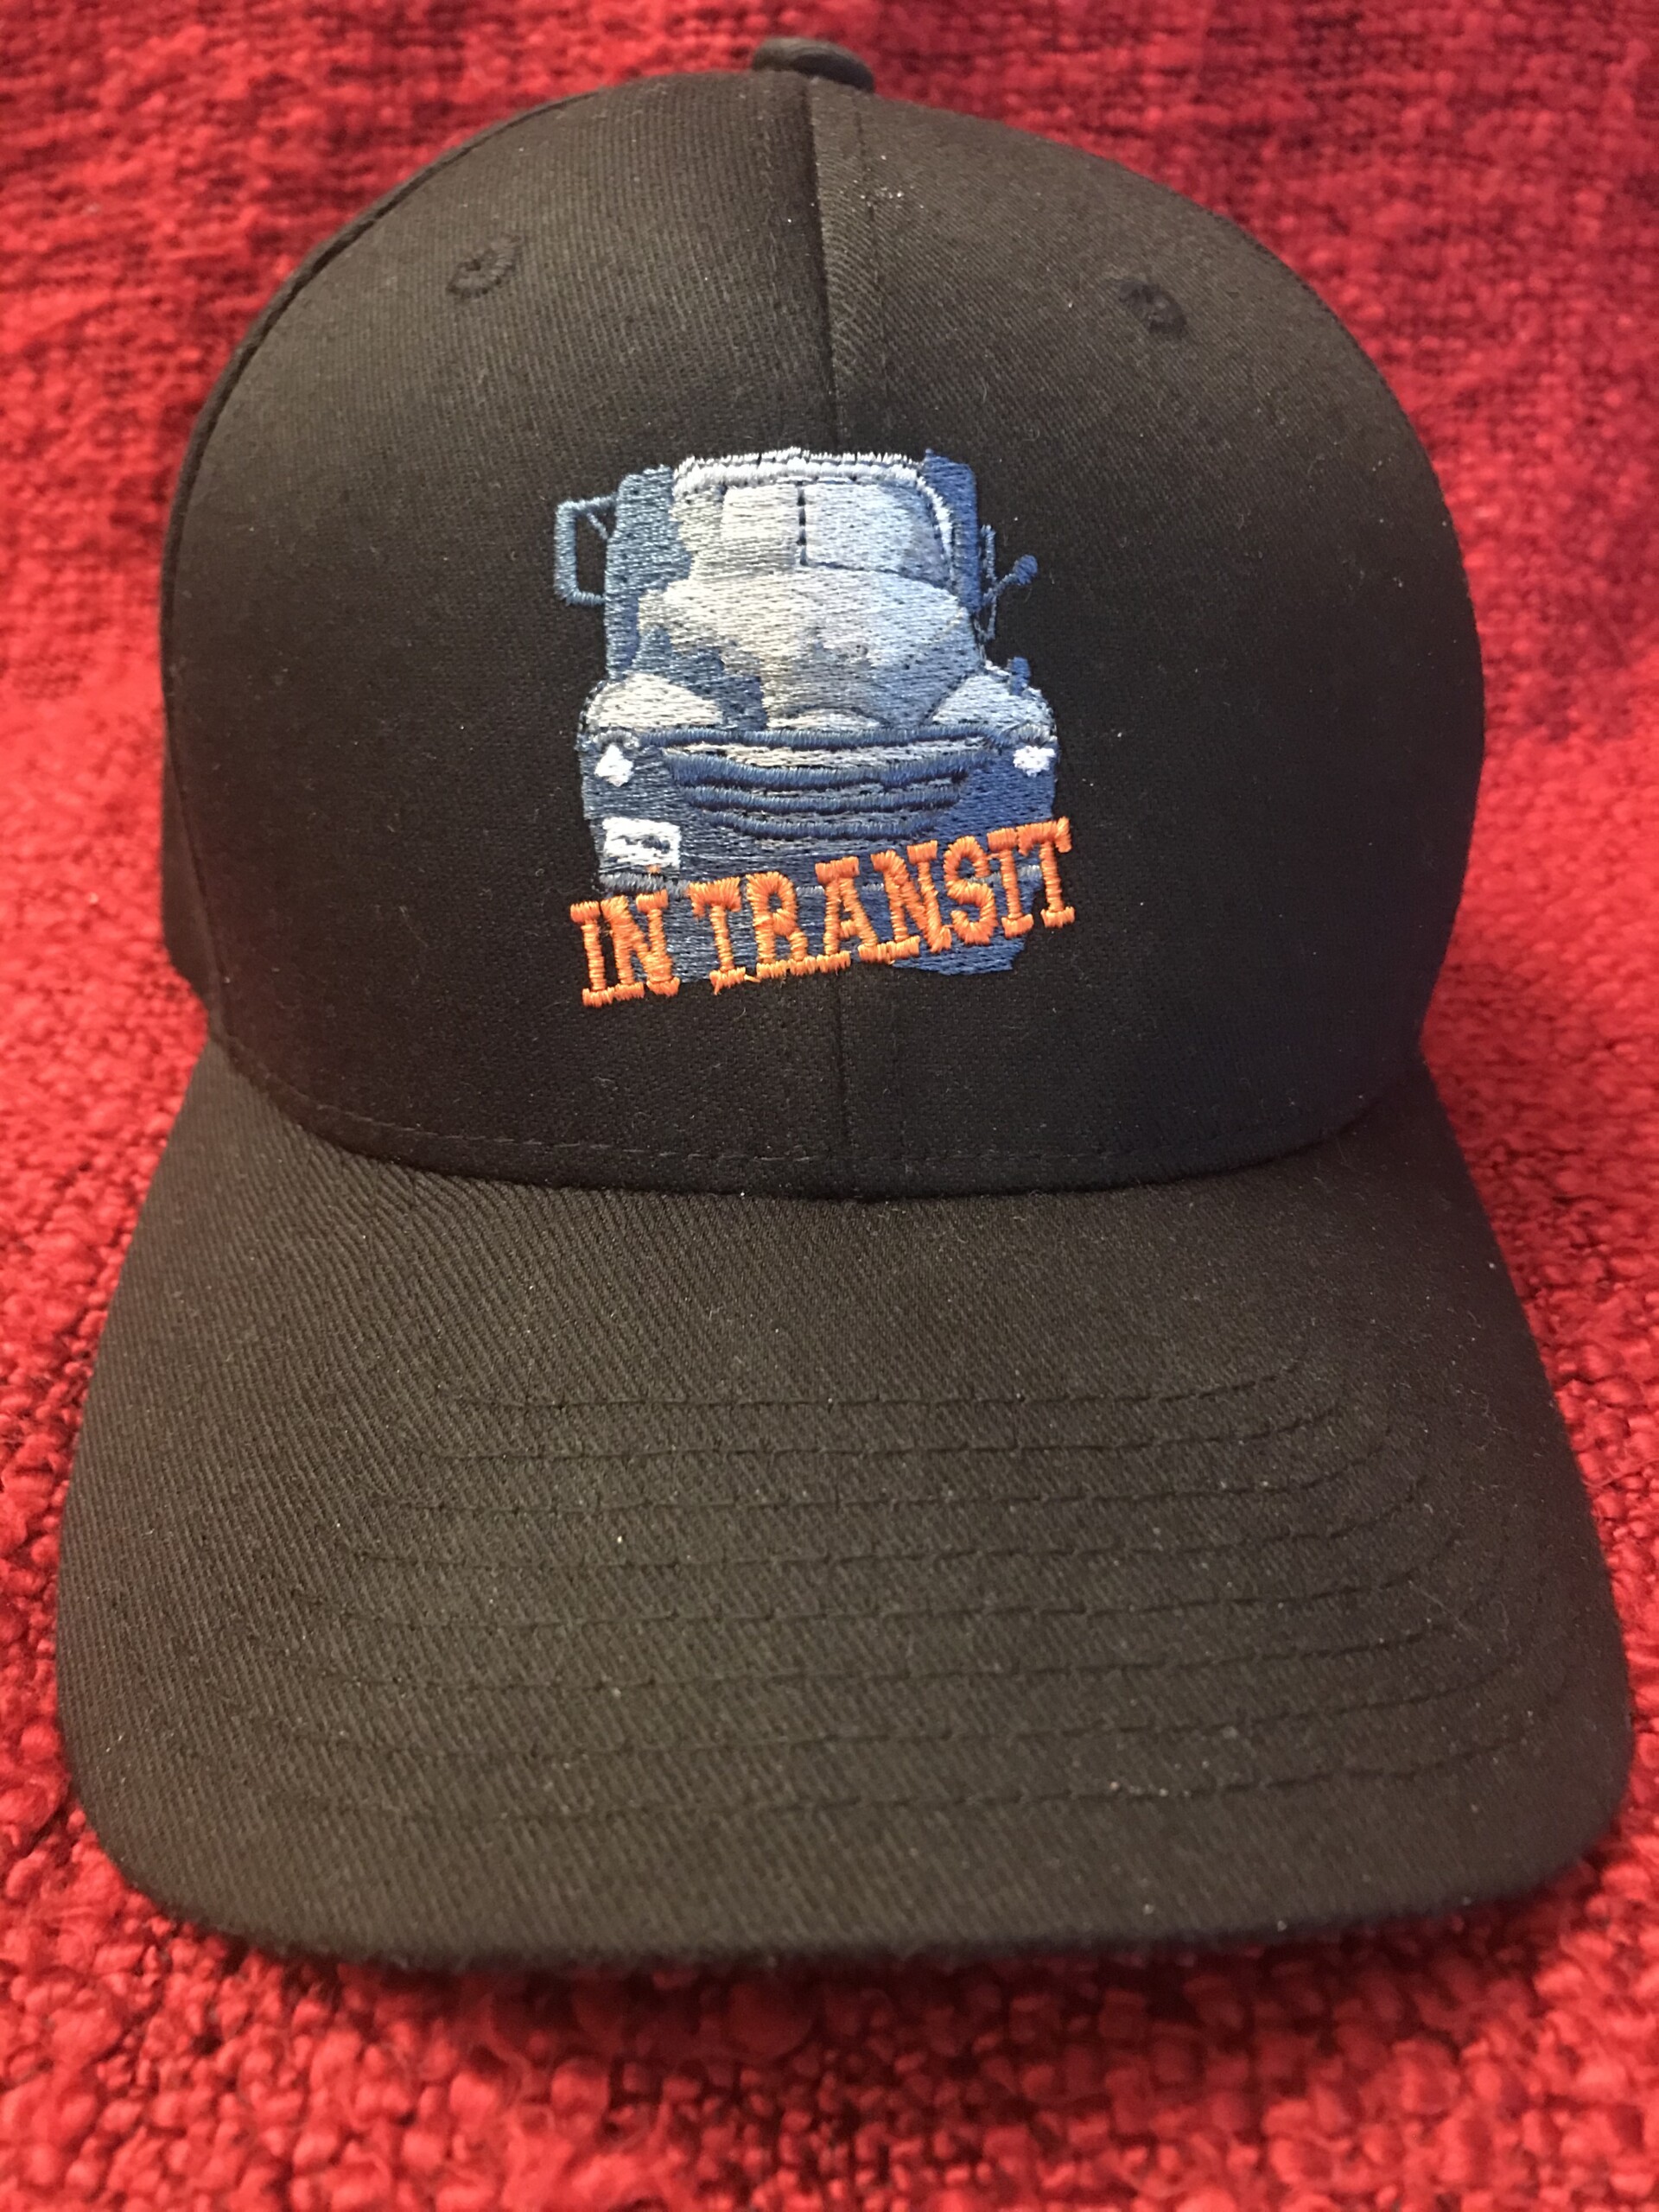 In Transit Logo on Black Hat